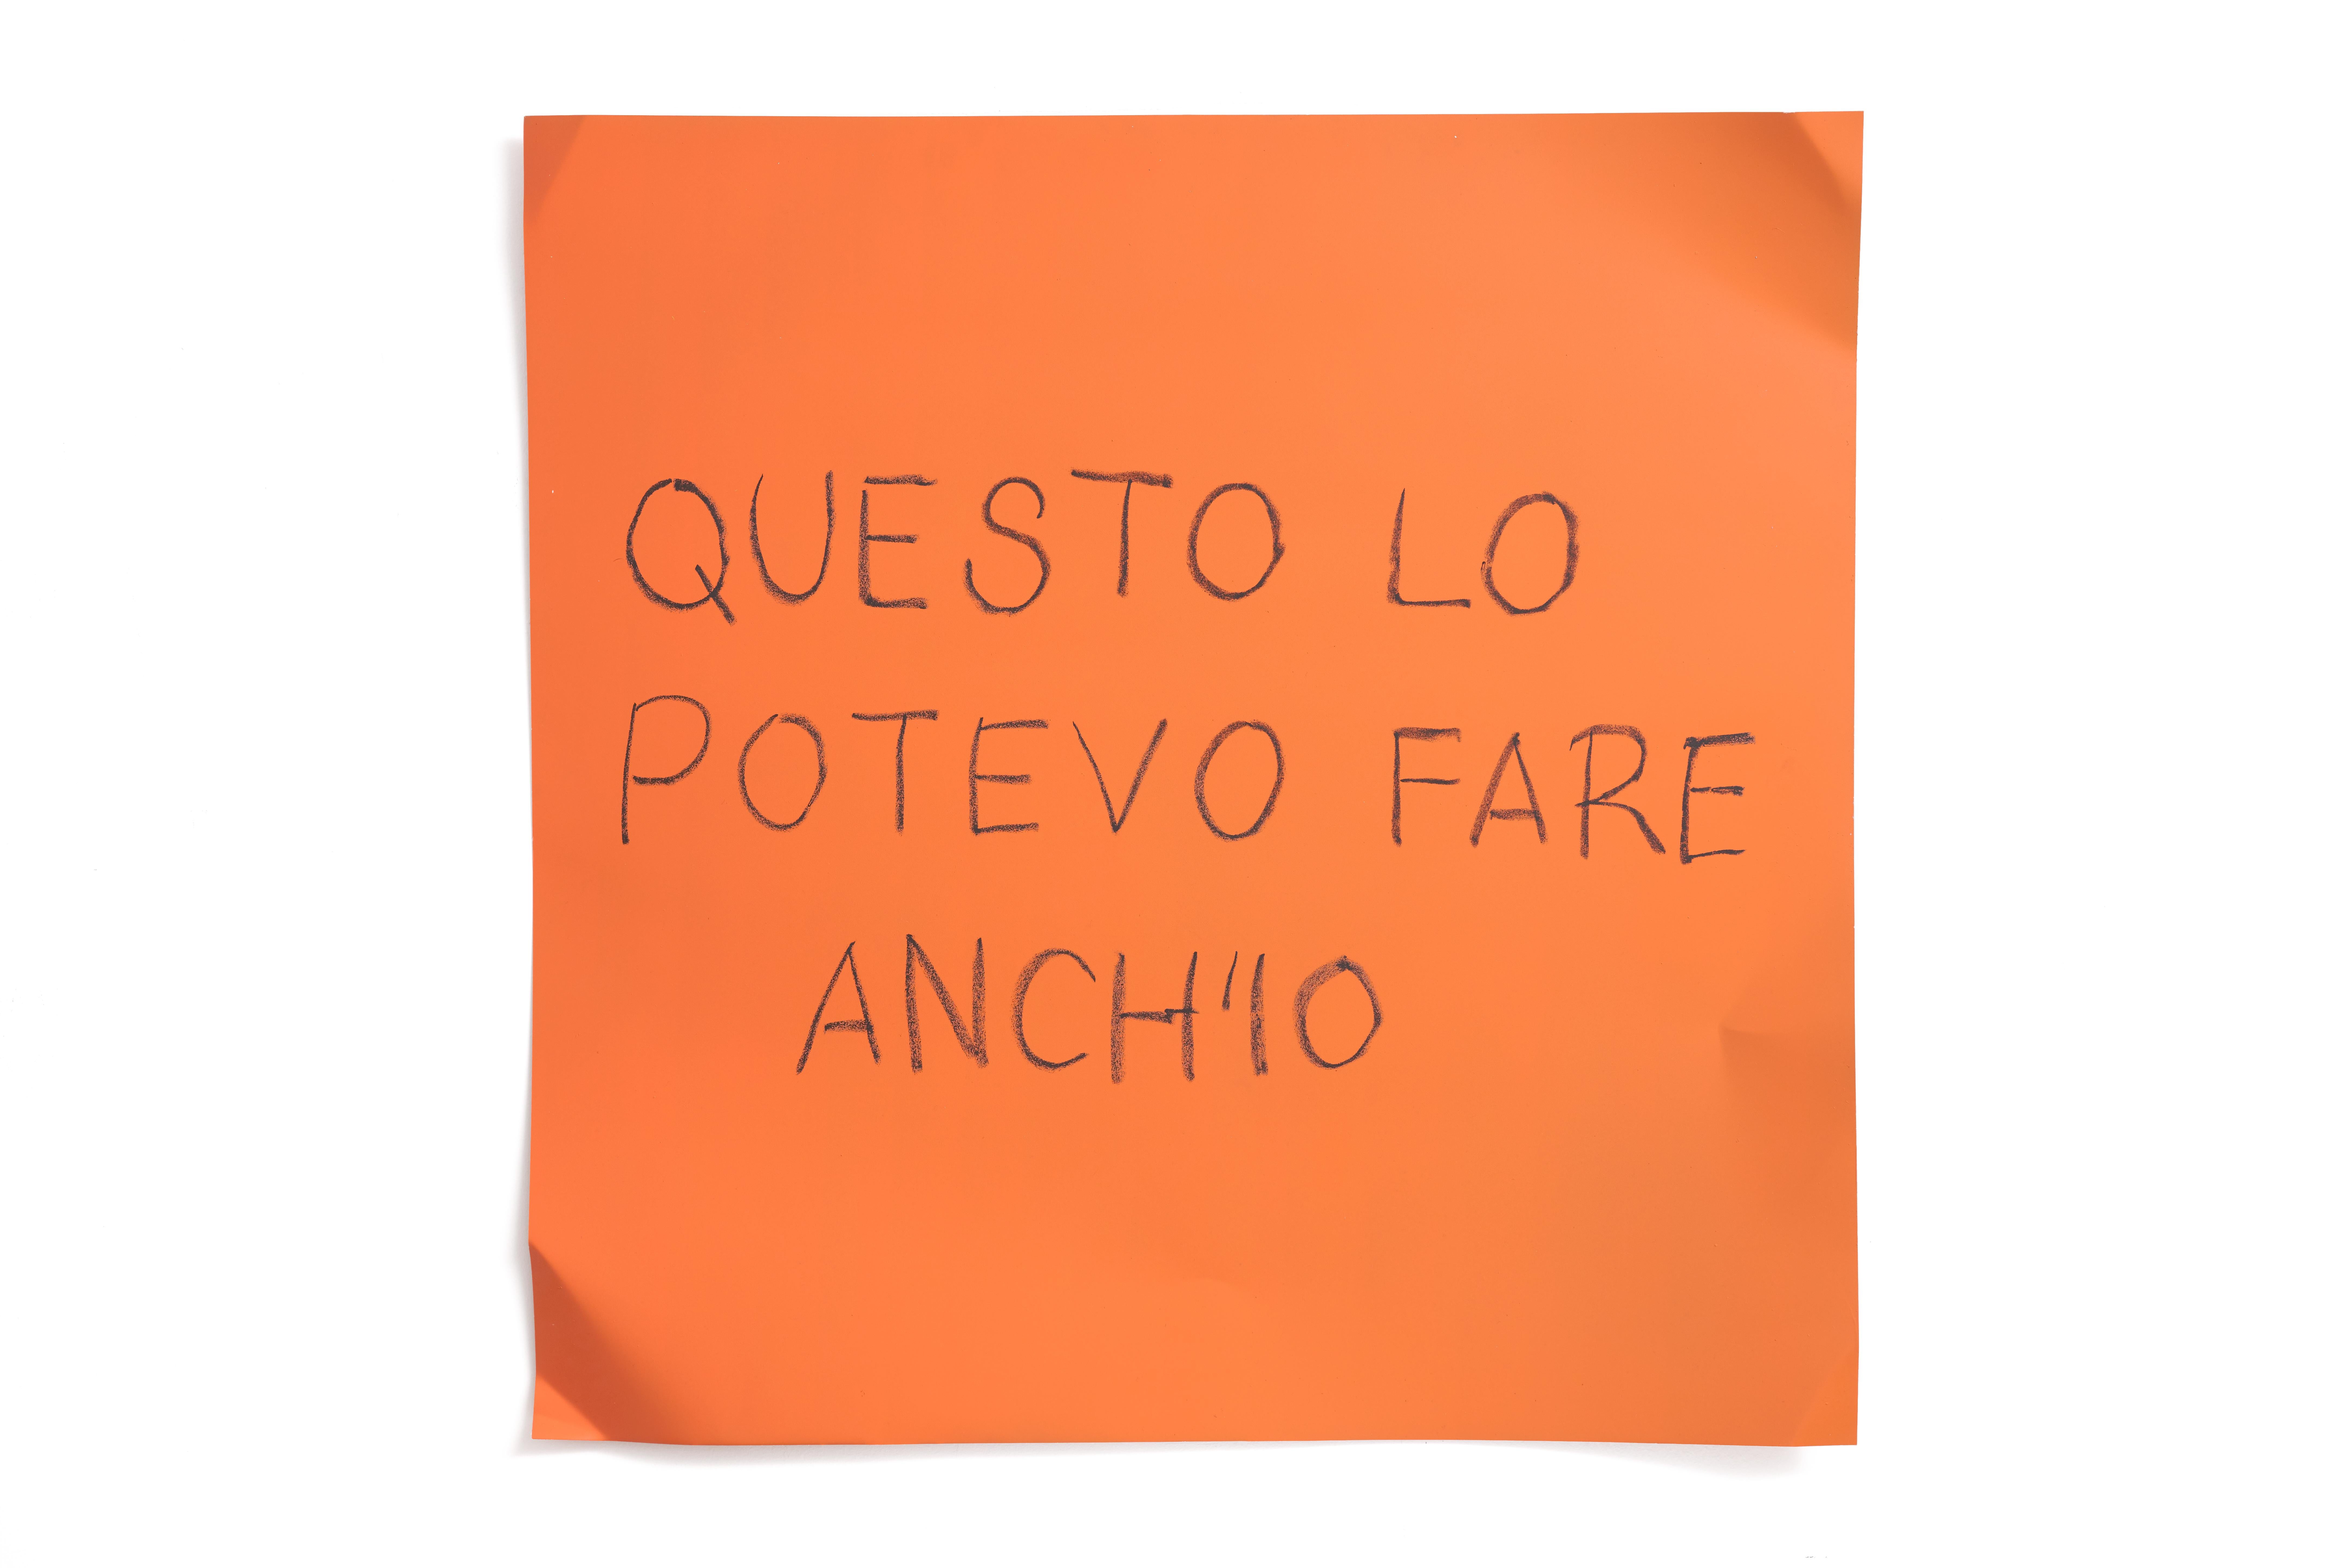 Daniele Sigalot  Abstract Sculpture - Daniele Sigalot, Ma non lo hai fatto - Words, 2020, mixed media, orange